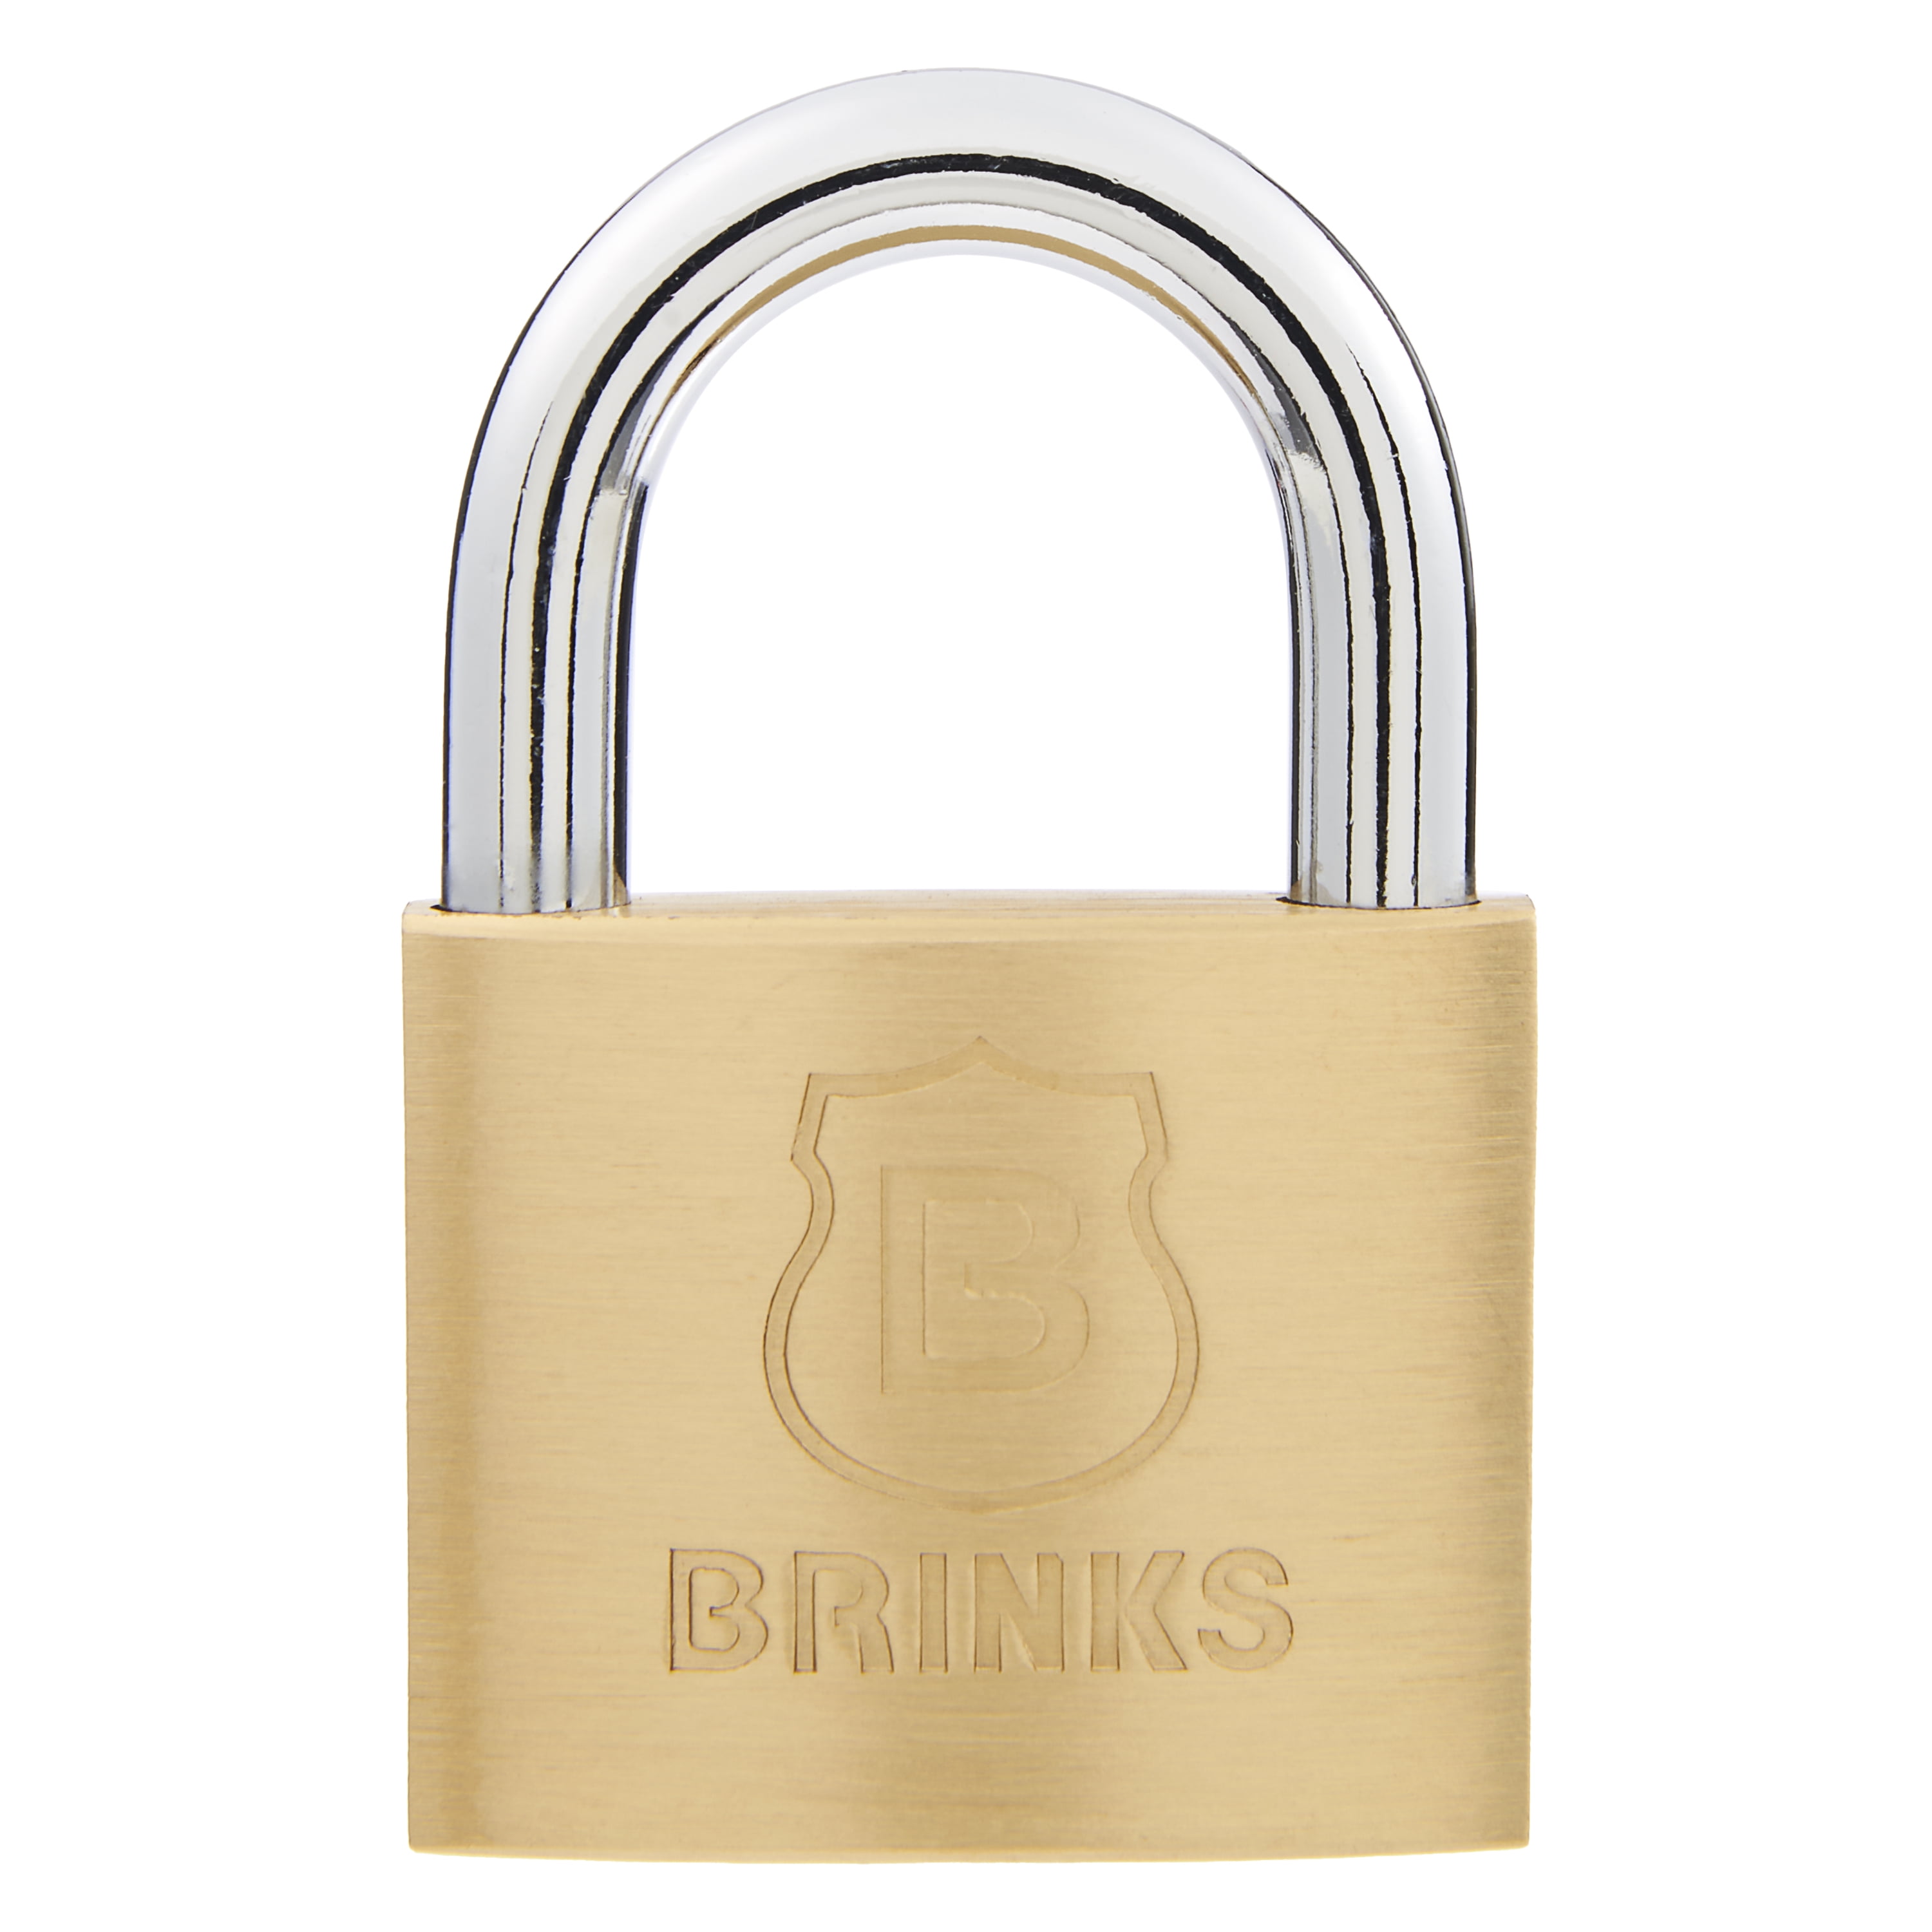 Brink's 40mm Long Shackle Solid Brass Padlock, 4 Pack